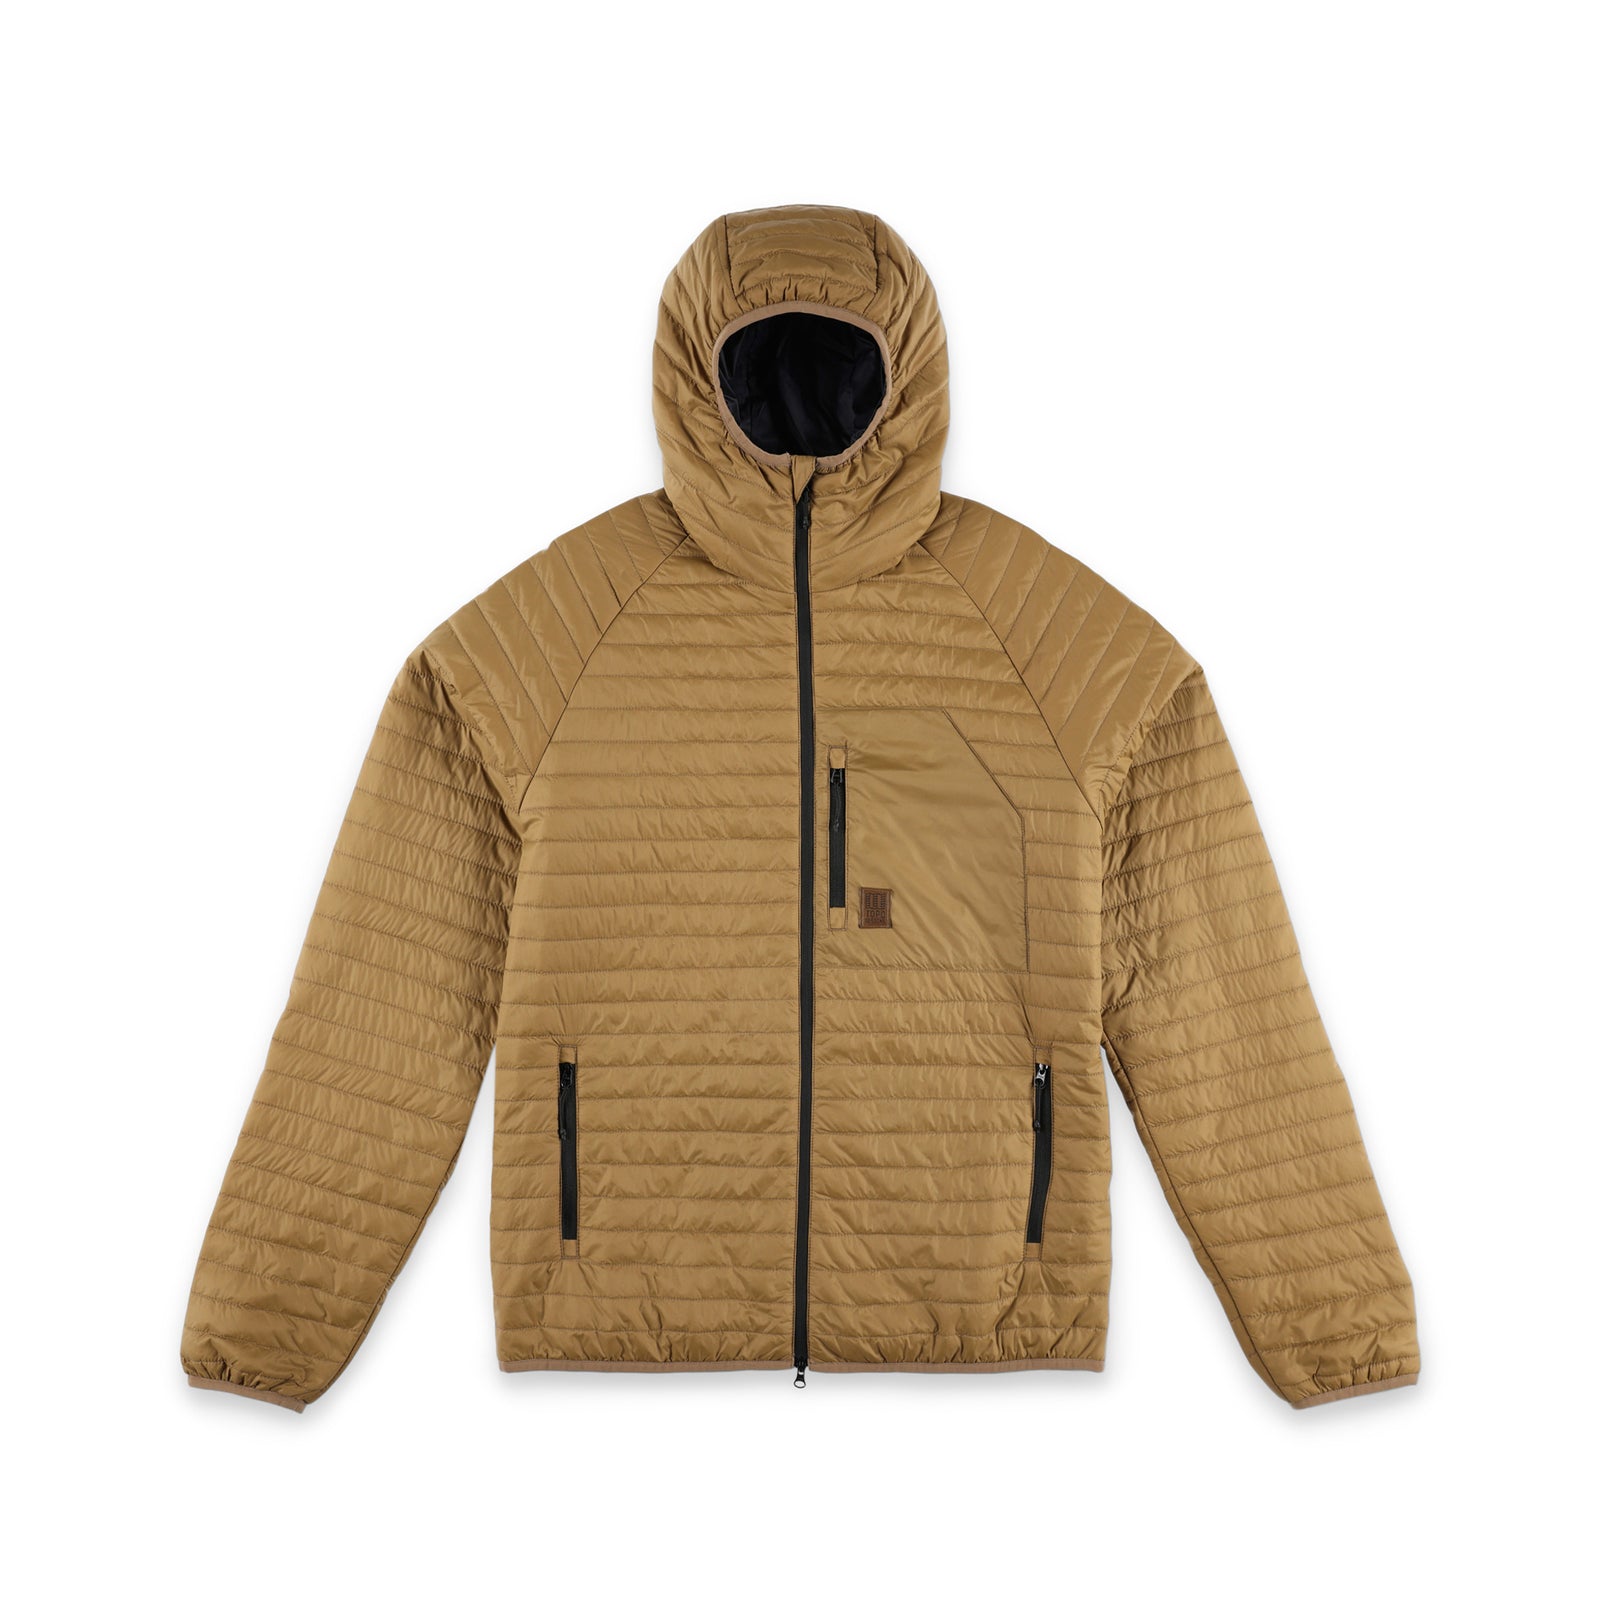 Topo Designs Men's Global Puffer packable recycled insulated Hoodie jacket in "dark khaki" brown